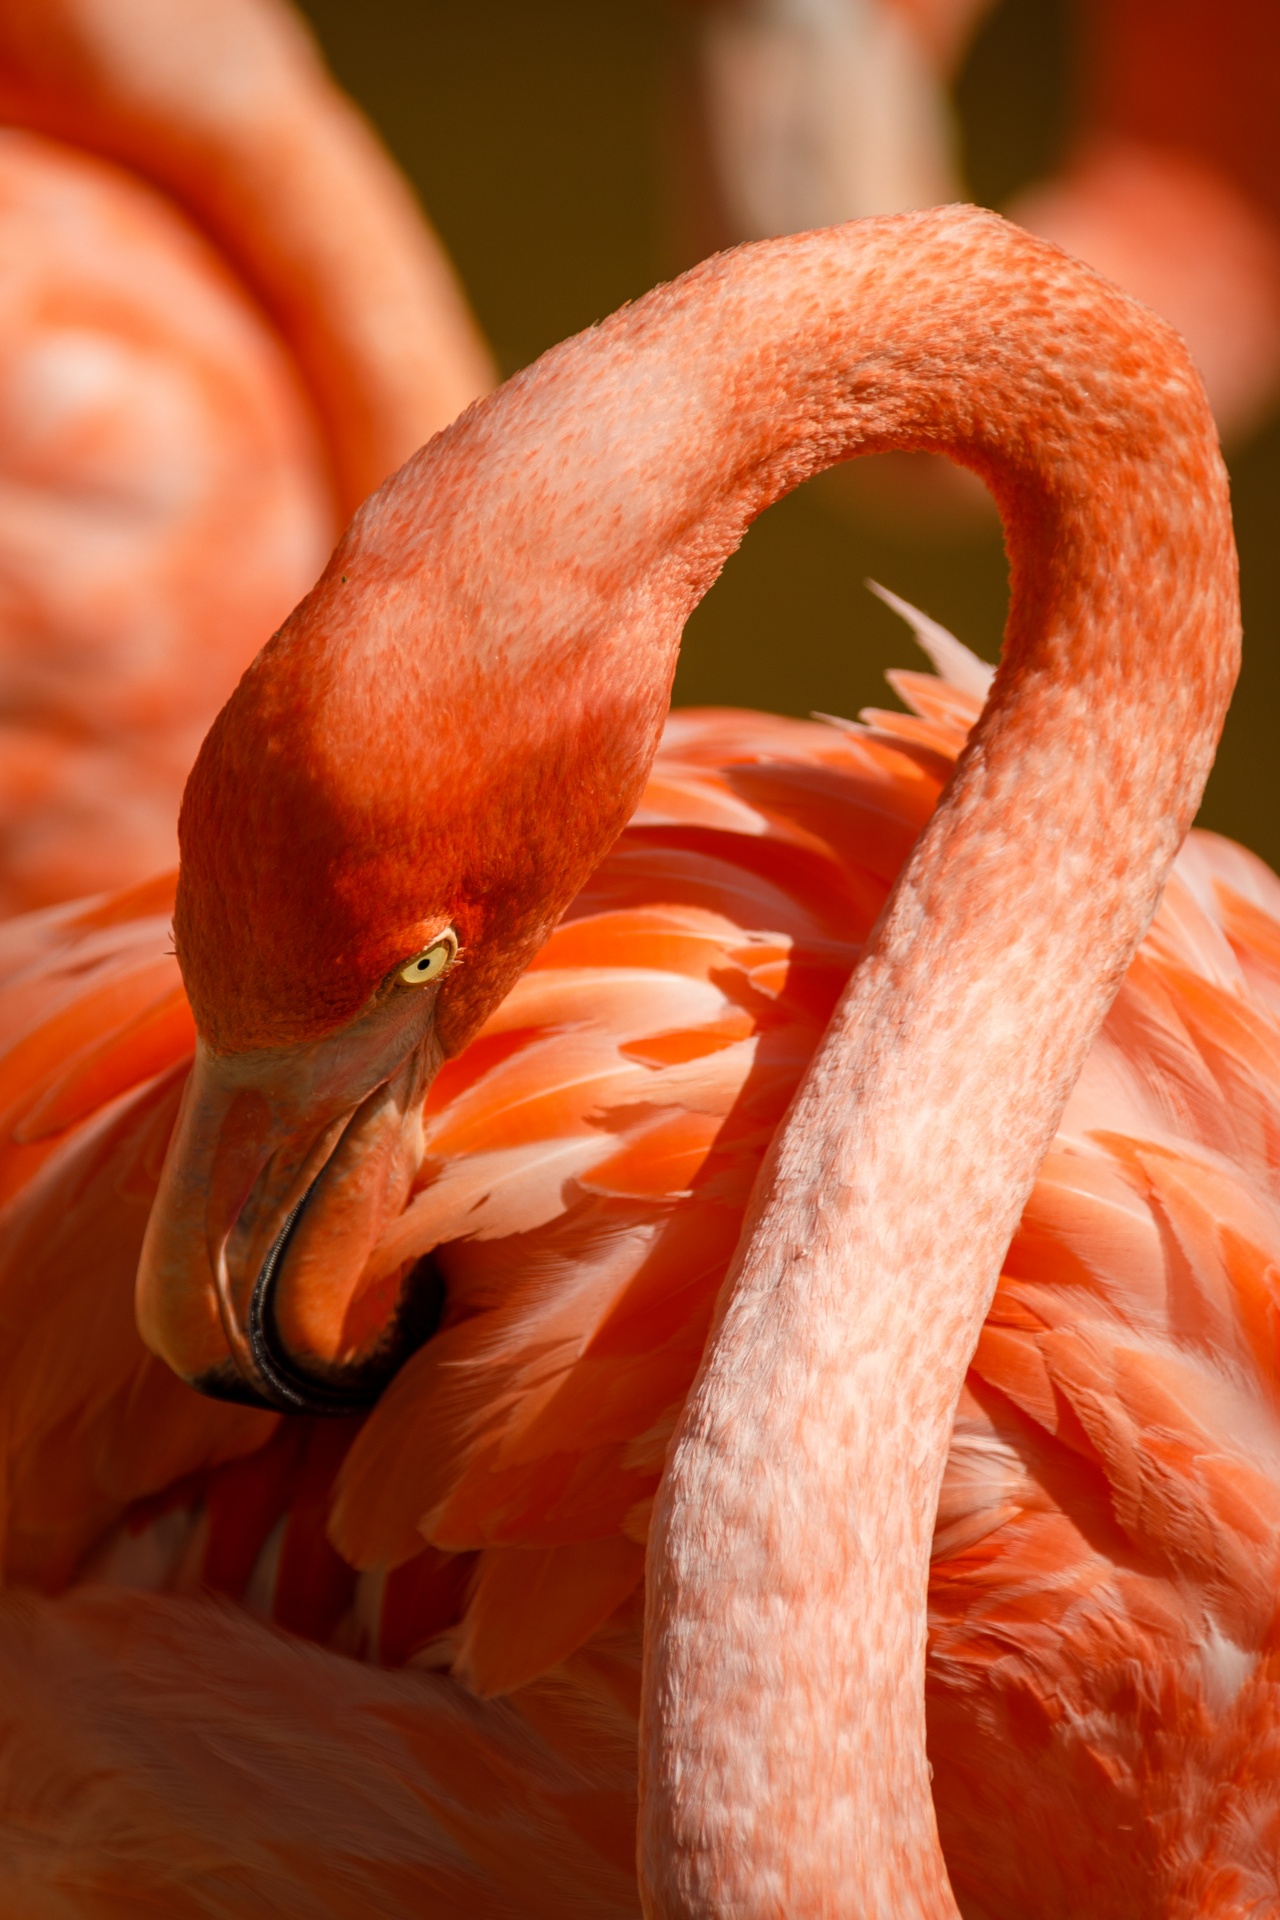 Flamingo bird grooming its feathers